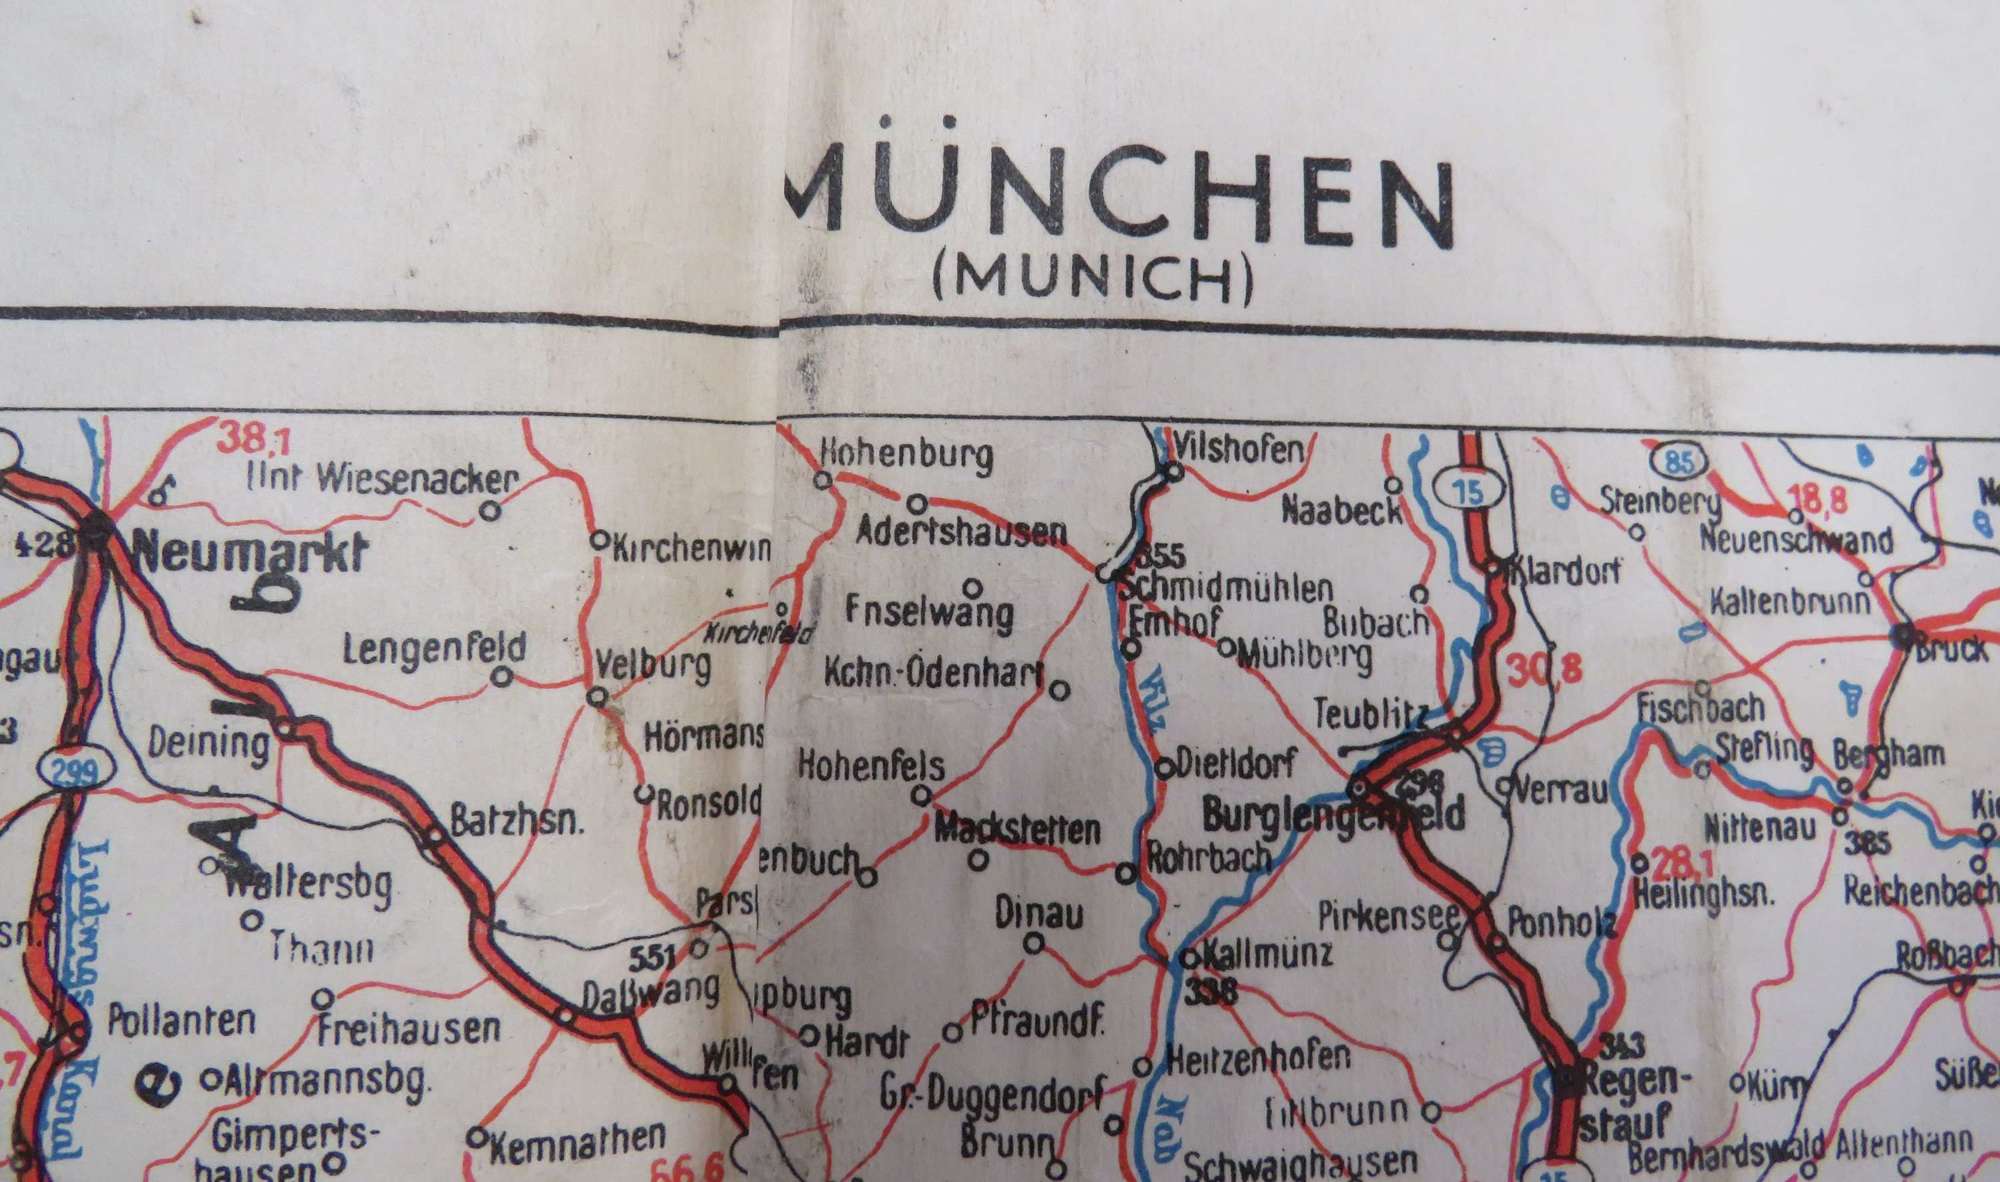 1944 Invasion Transport Map of Munich Germany